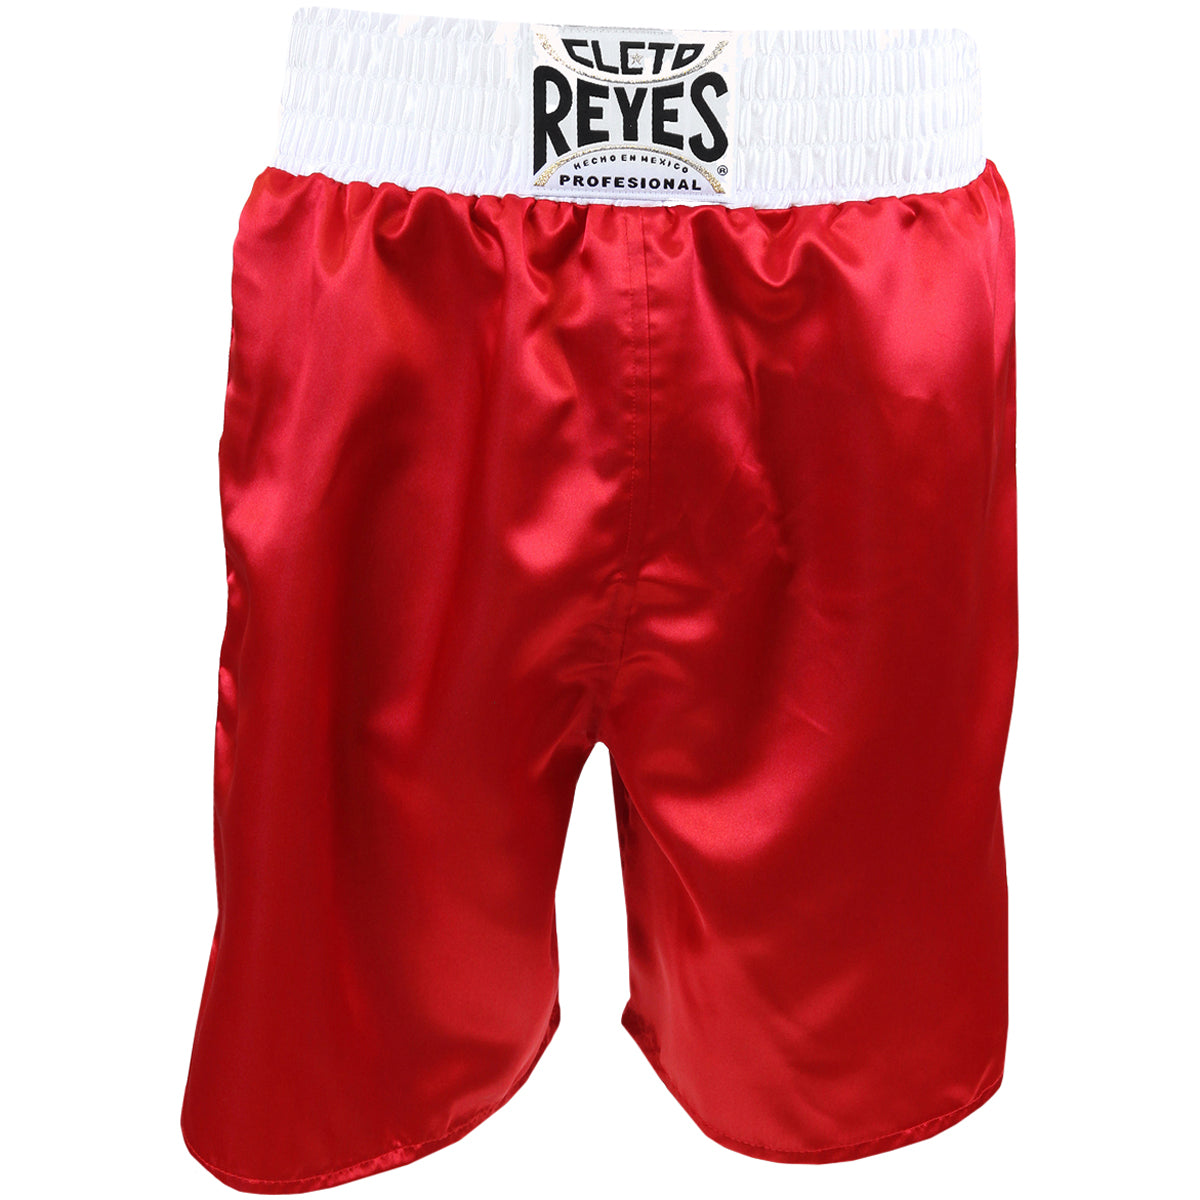 Cleto Reyes Satin Classic Boxing Trunks - Large (40") - Red/White Cleto Reyes